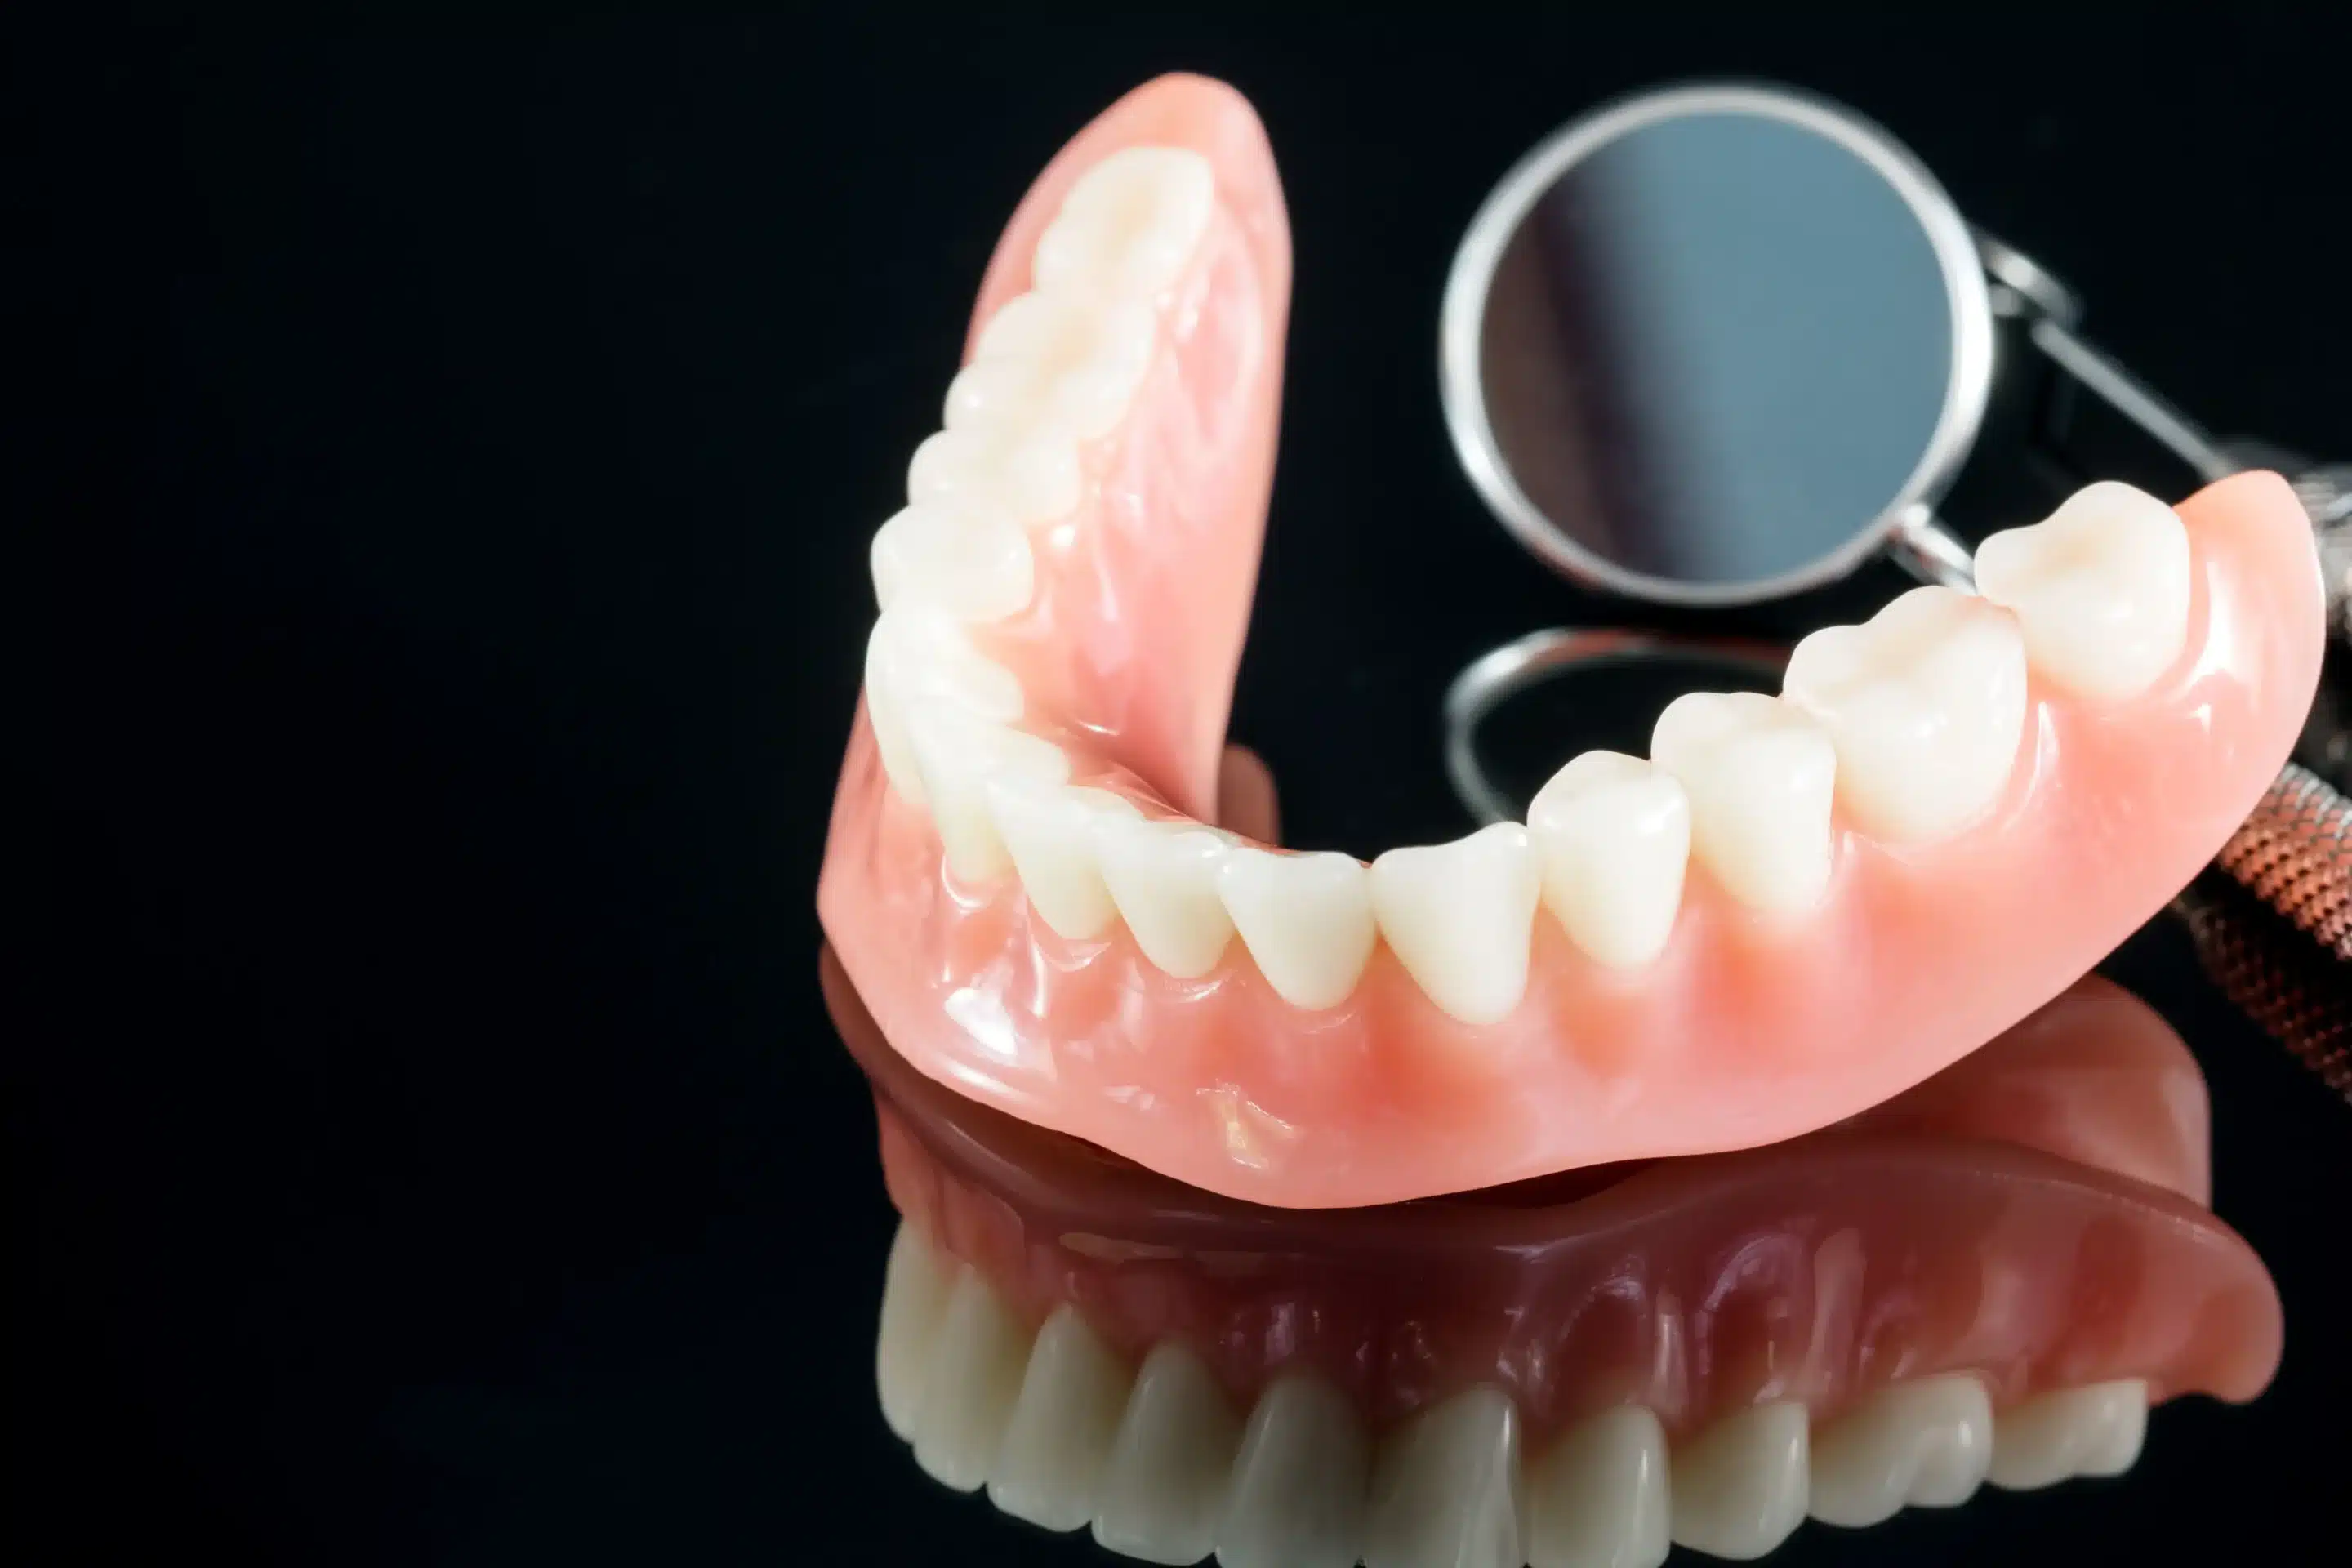 modelo-dientes-que-muestra-modelo-puente-corona-implante-protesis-dental-clinica dental sevilla koresdent